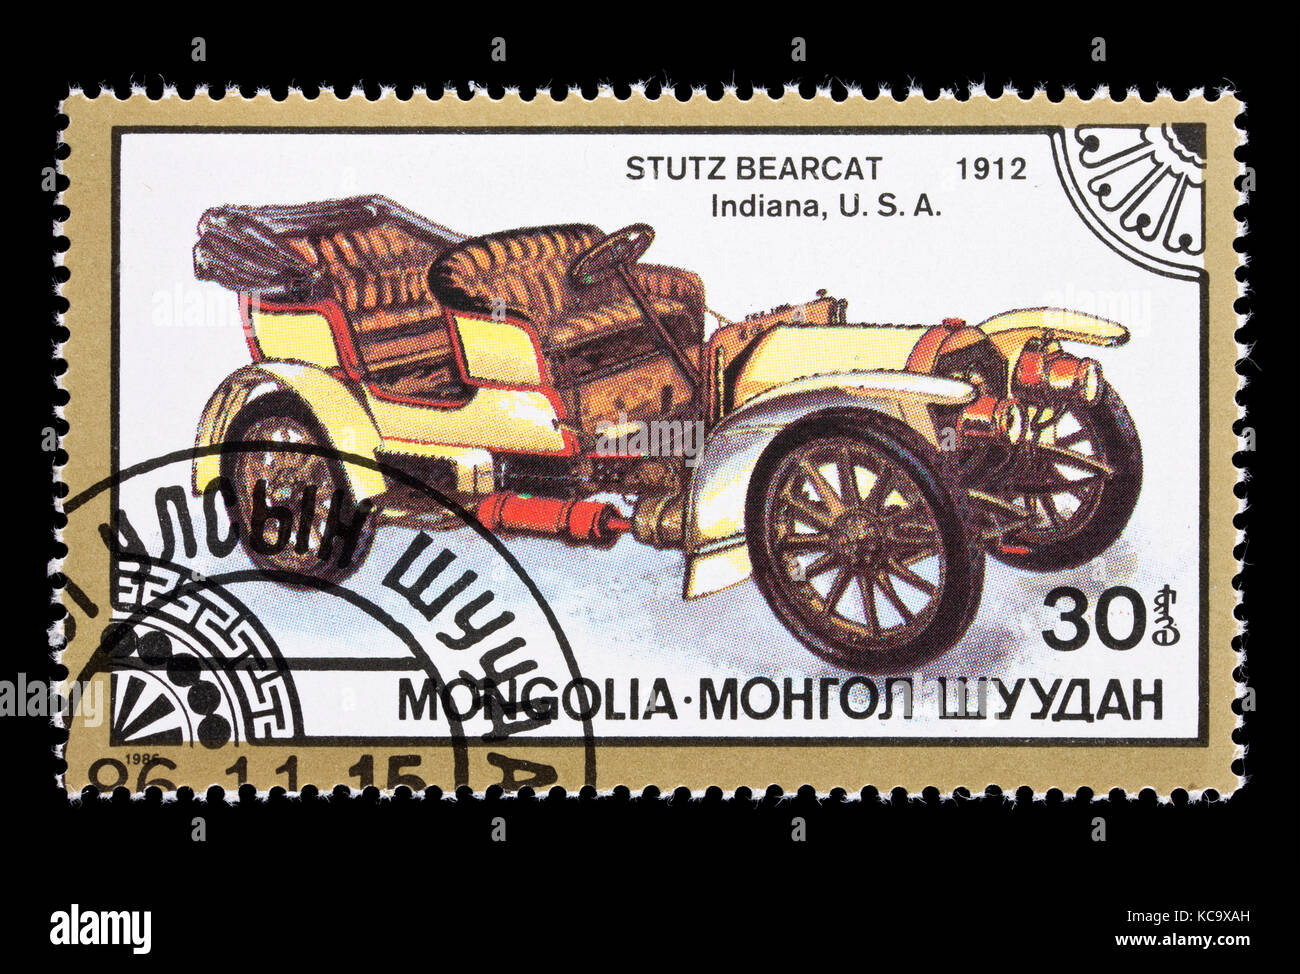 Classic U.S. Stamps